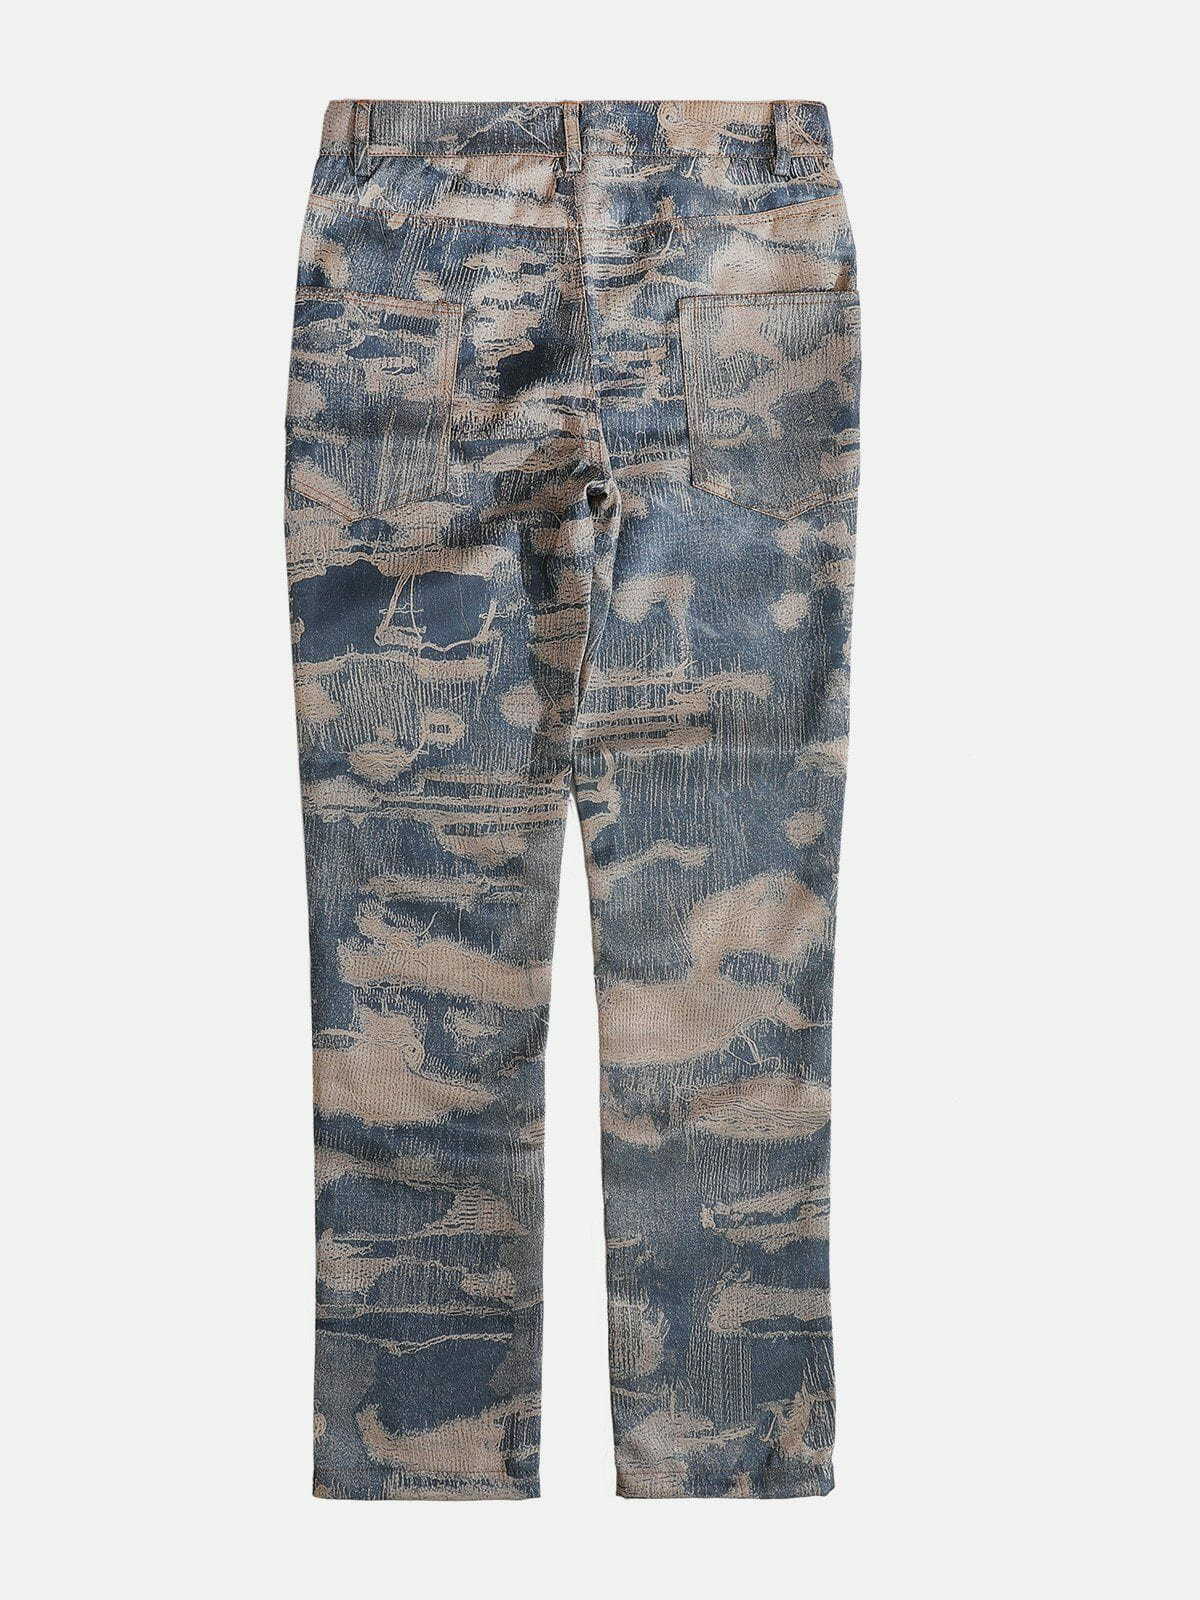 trendy camouflage tie dye jeans edgy & vibrant streetwear 5402